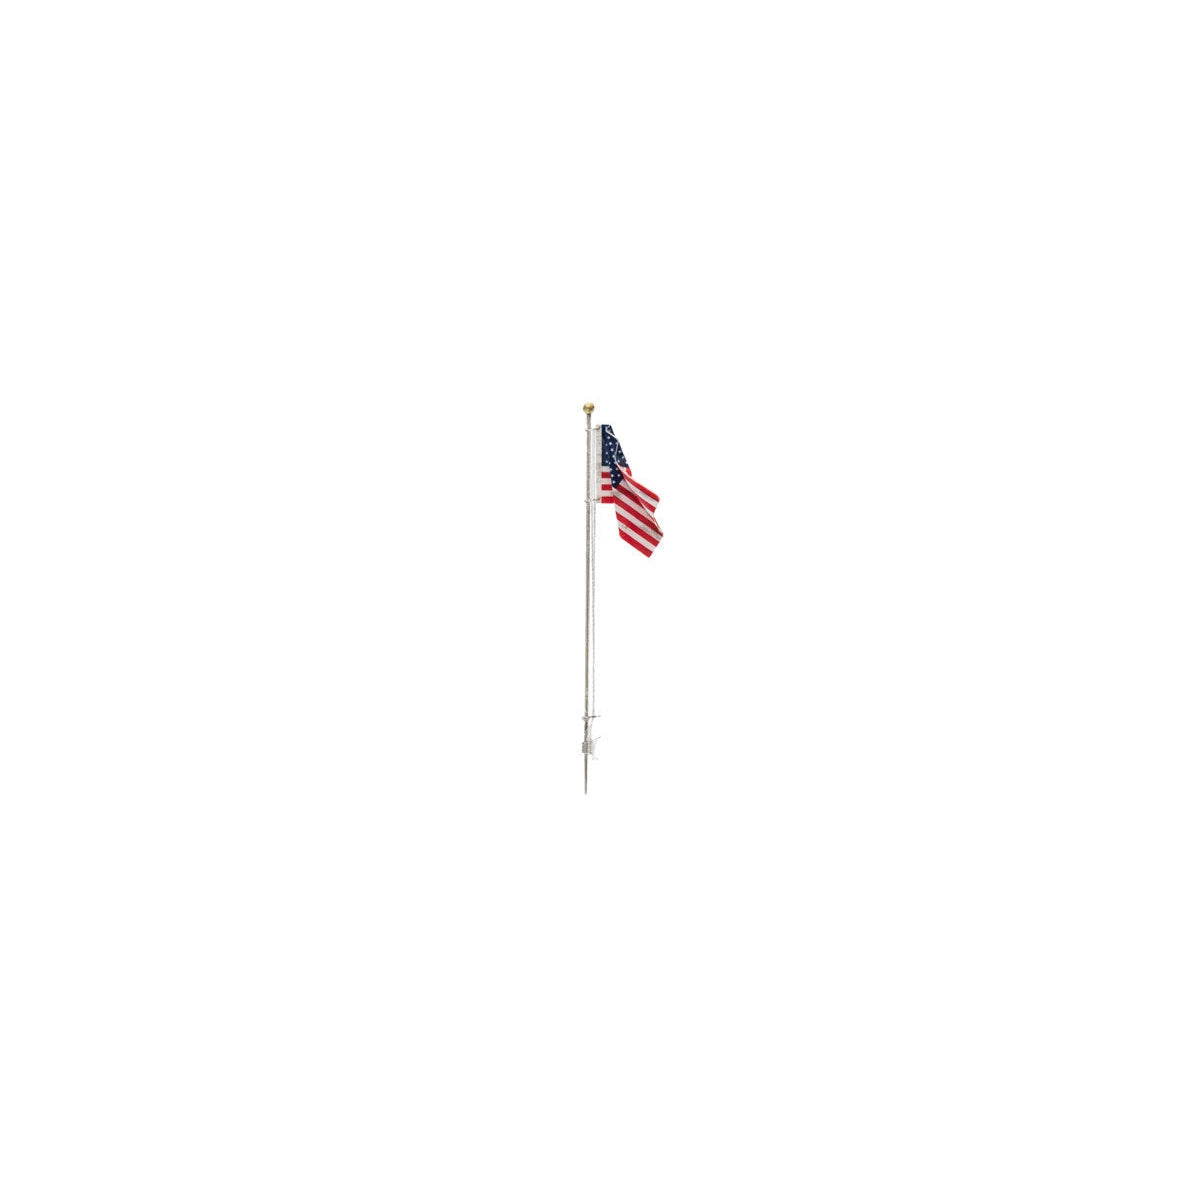 Woodland Scenics Small US Flag - Pole